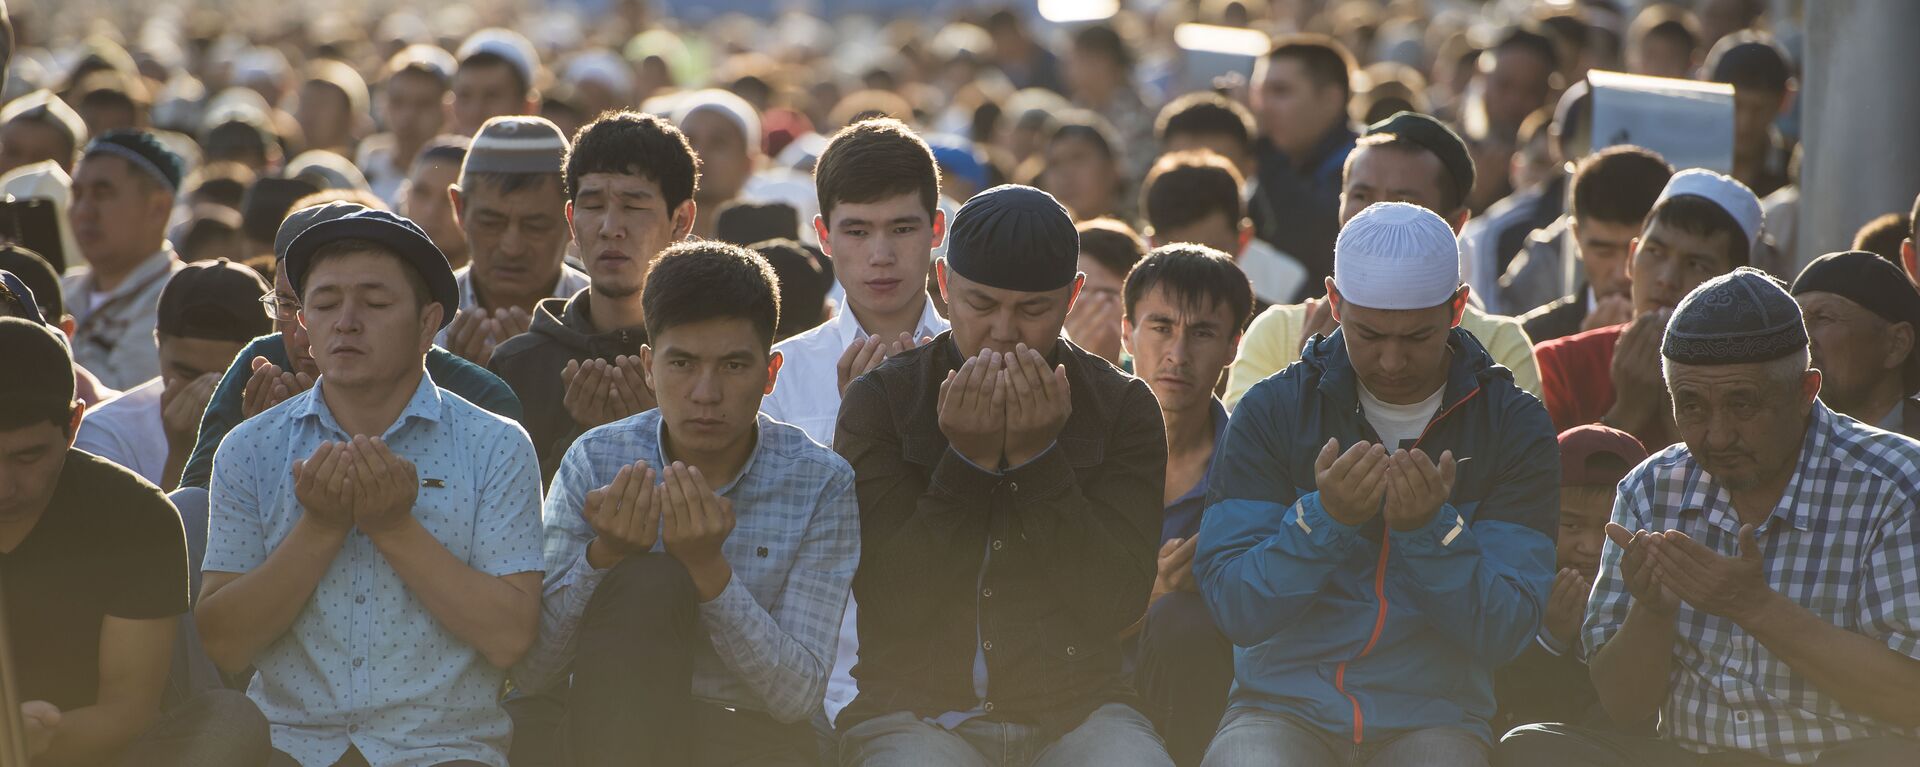 Мусульмане на праздничном намазе на старой площади Бишкека. Архивное фото - Sputnik Кыргызстан, 1920, 07.05.2021